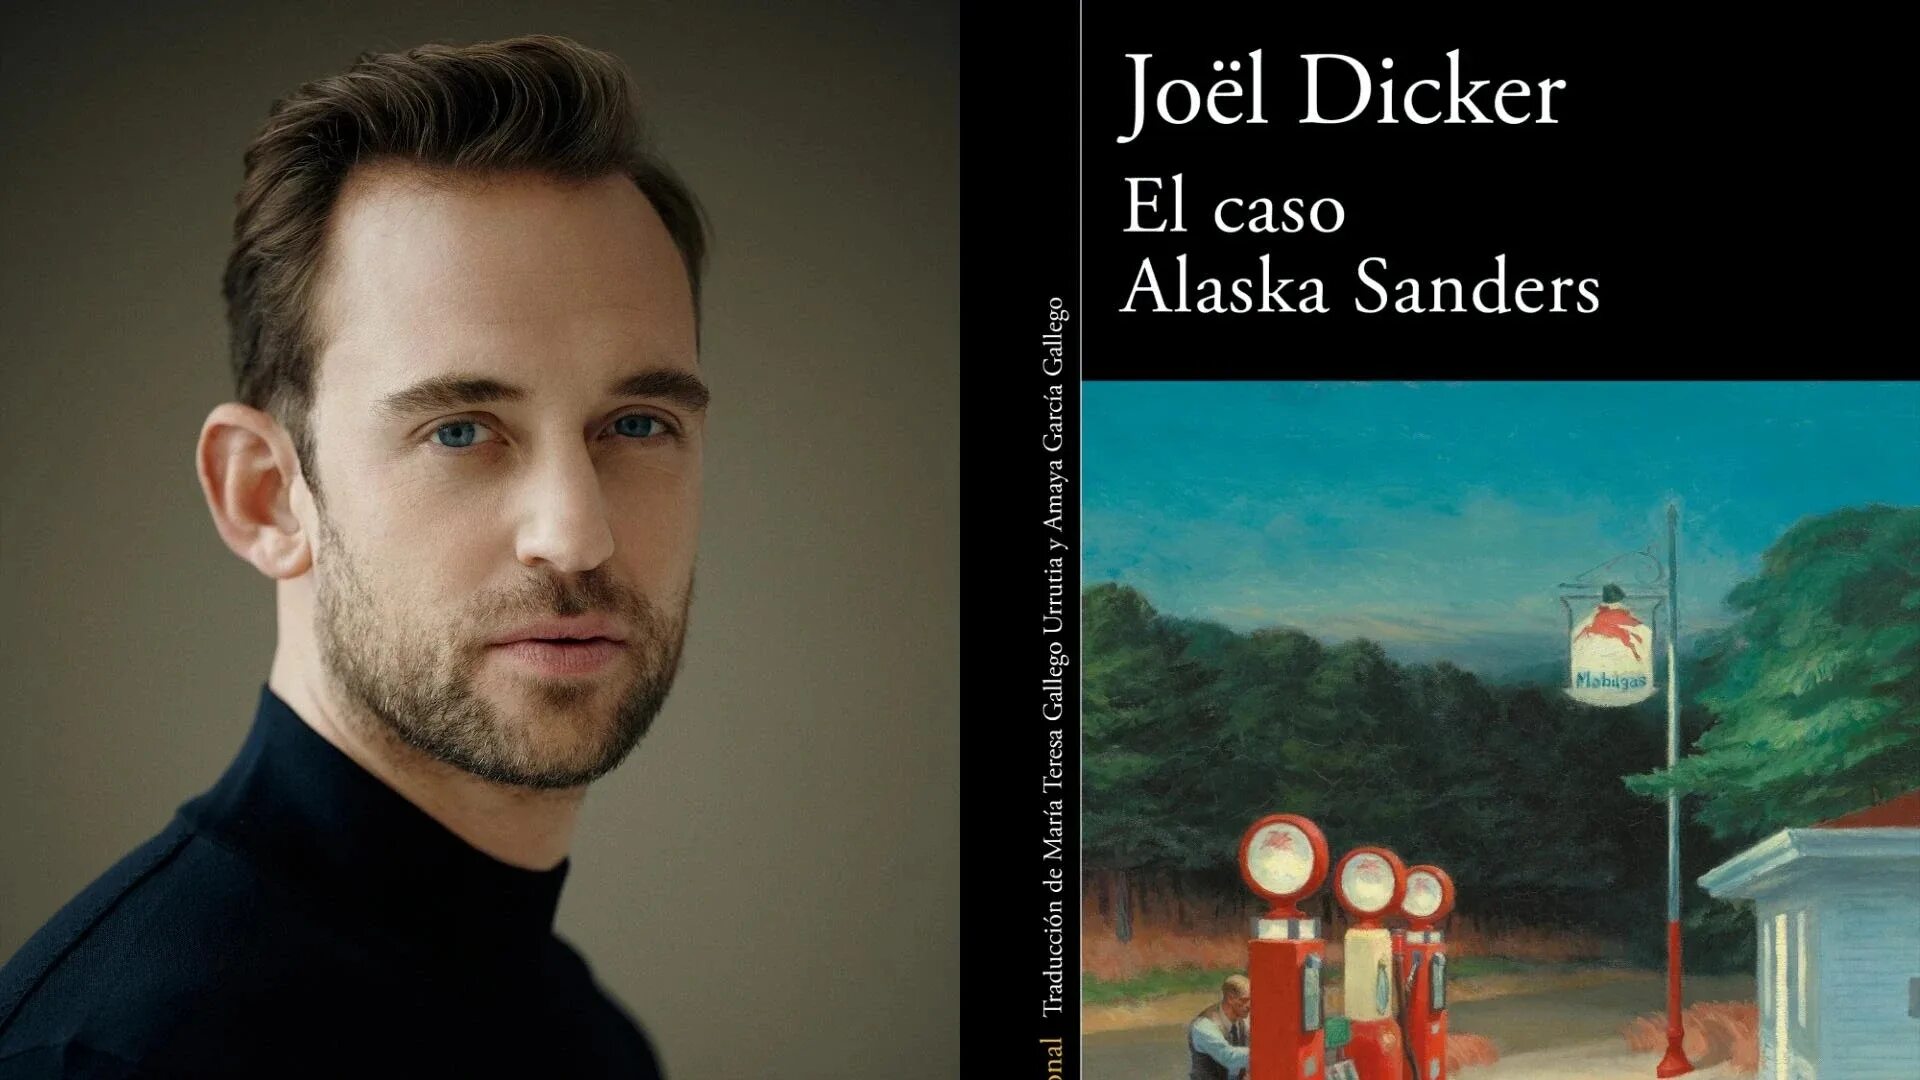 Жоэль диккер аляска сандерс. Жоэль Диккер. Аляска Сандерса. Дело Аляски Сандерс. “The Case of Alaska Sanders” by Joël dicker Cover.